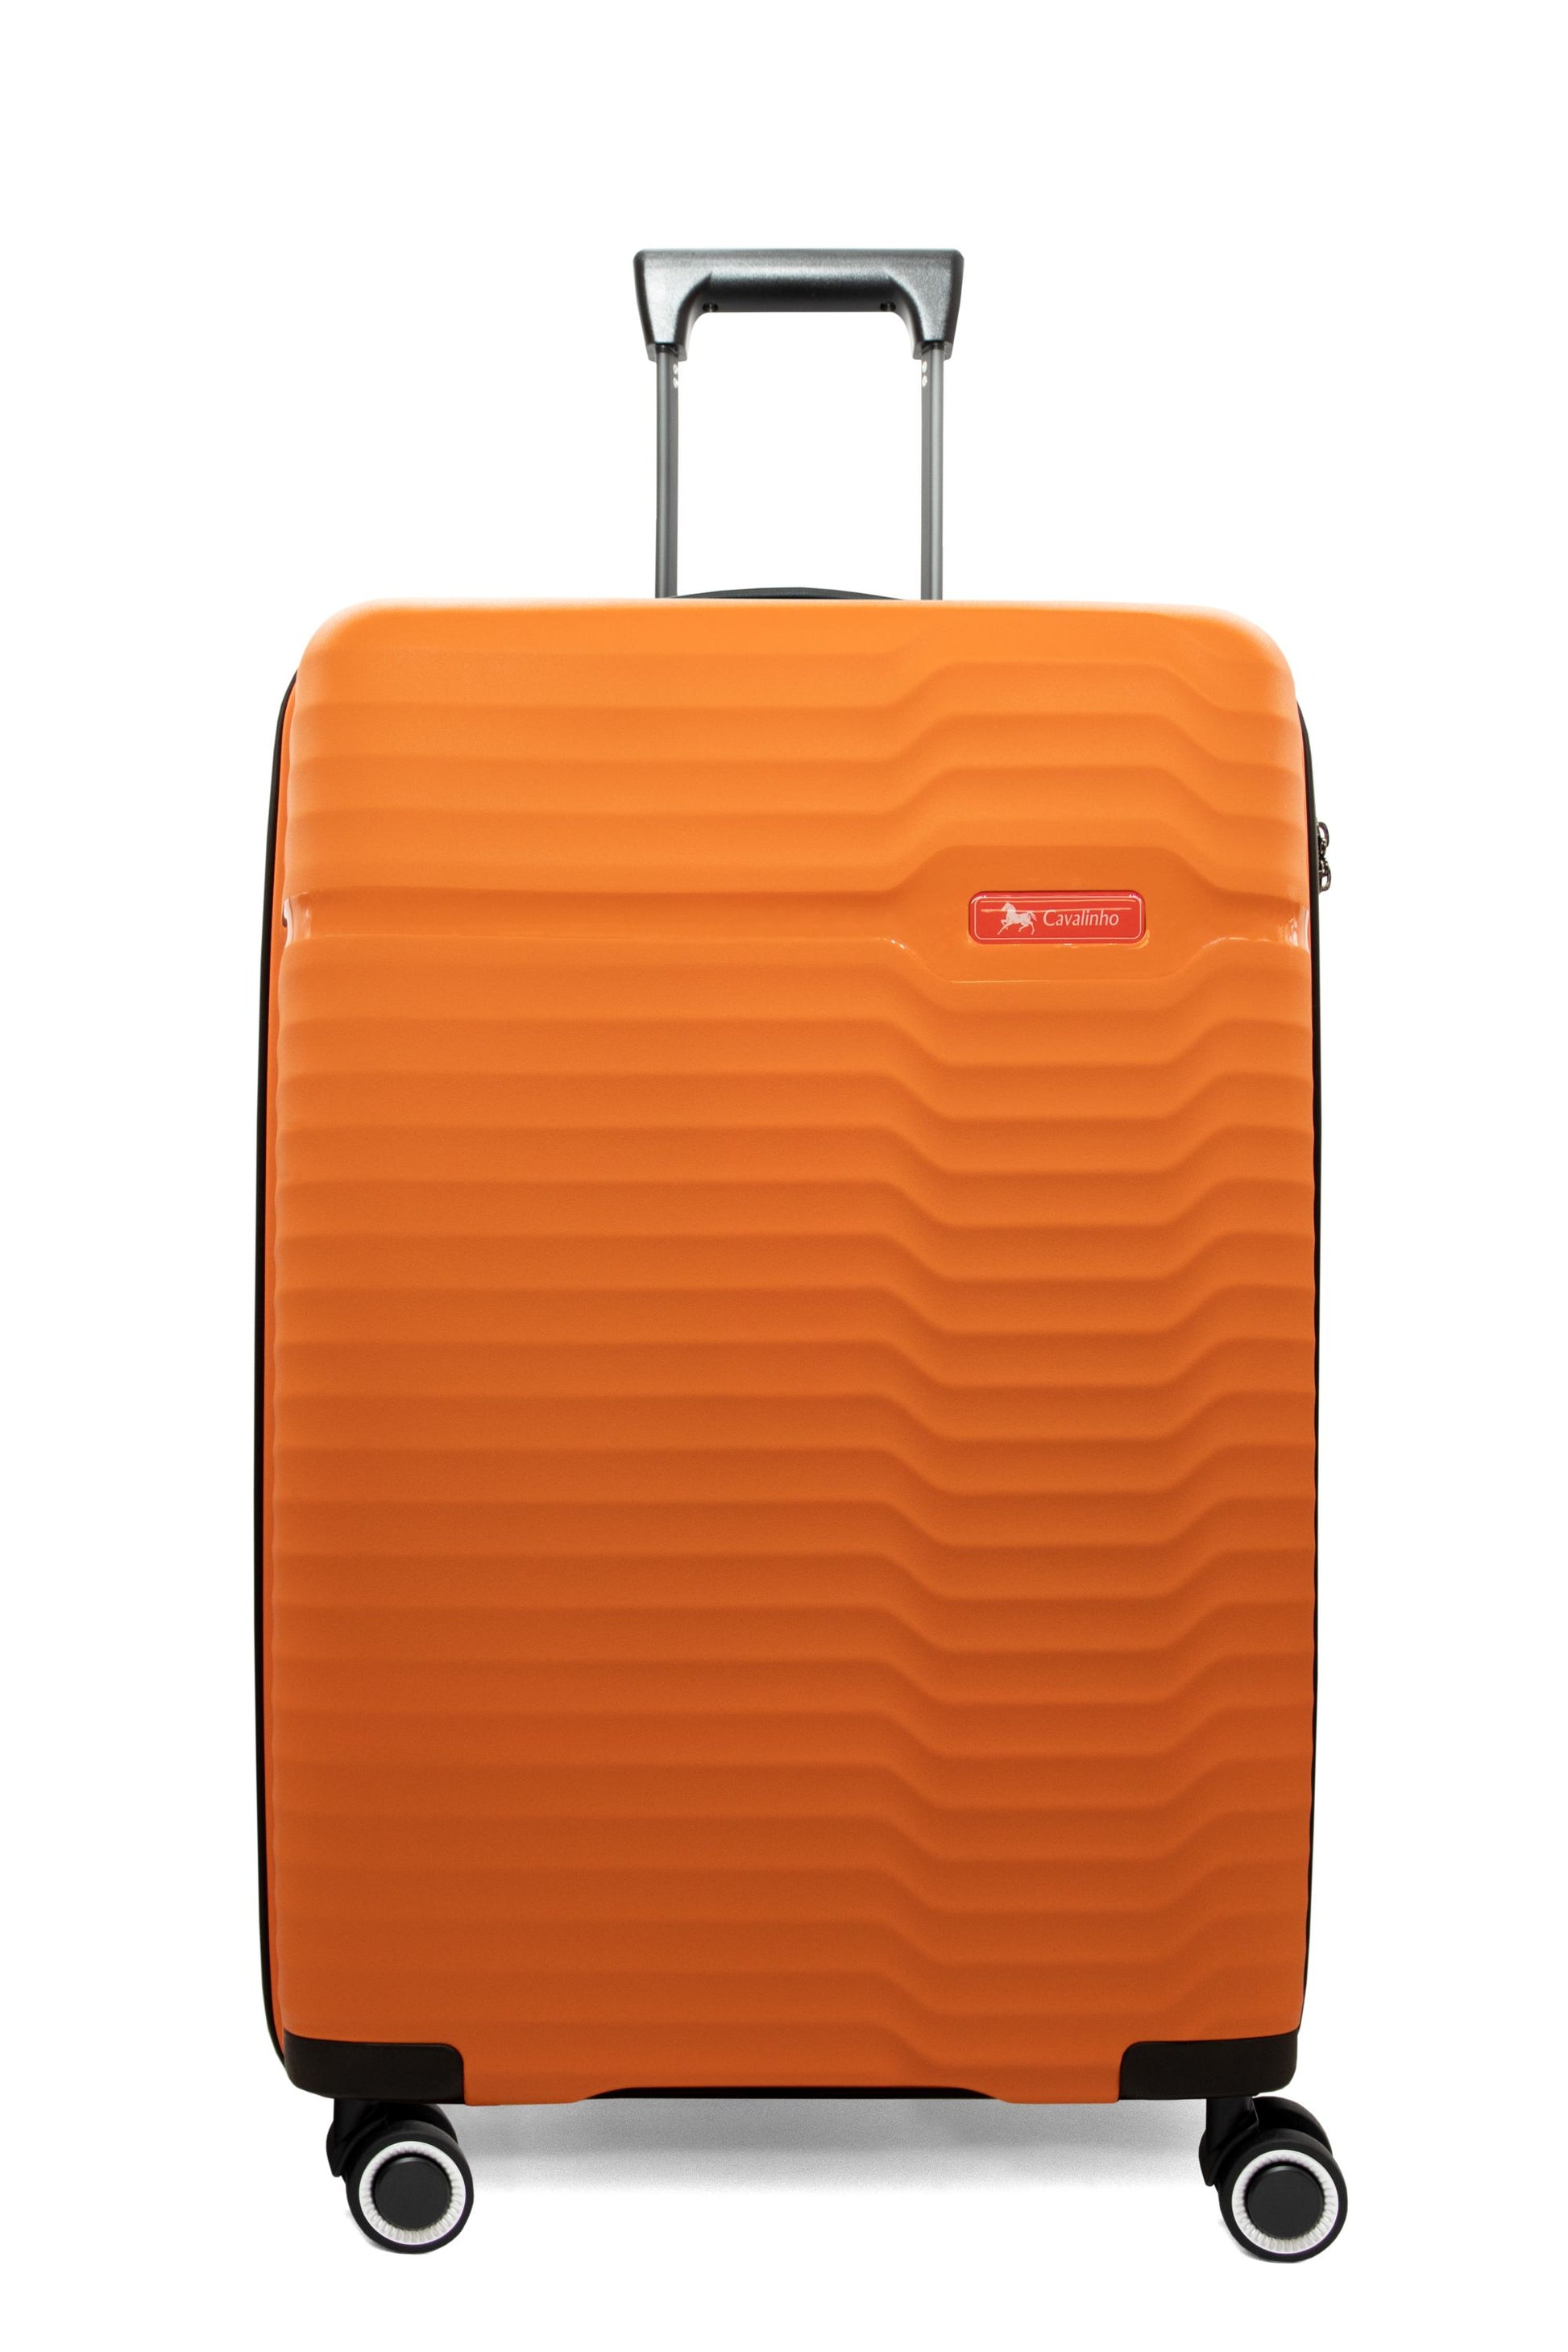 Cavalinho Check-in Hardside Luggage (24" or 28") - 24 inch DarkOrange - 68010003.37.24_1